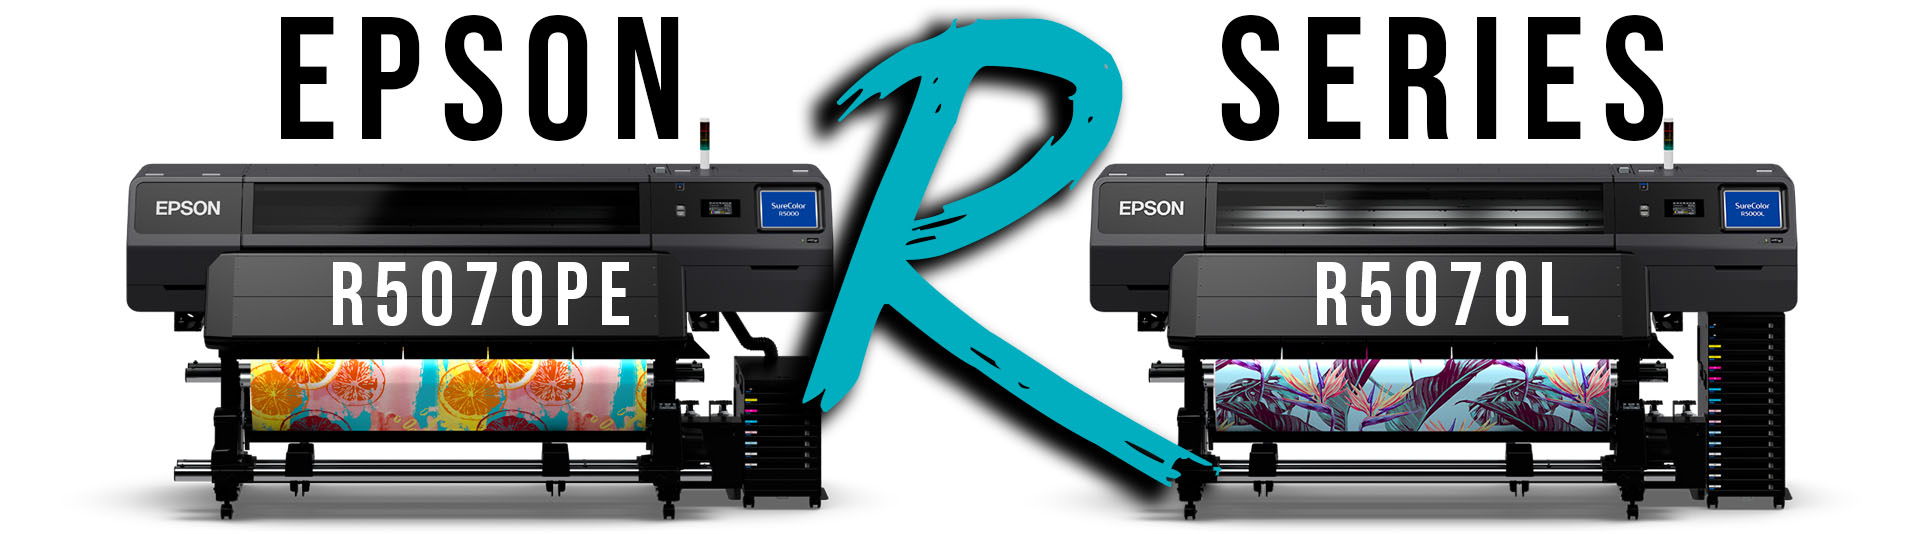 EPson R Series Printers 